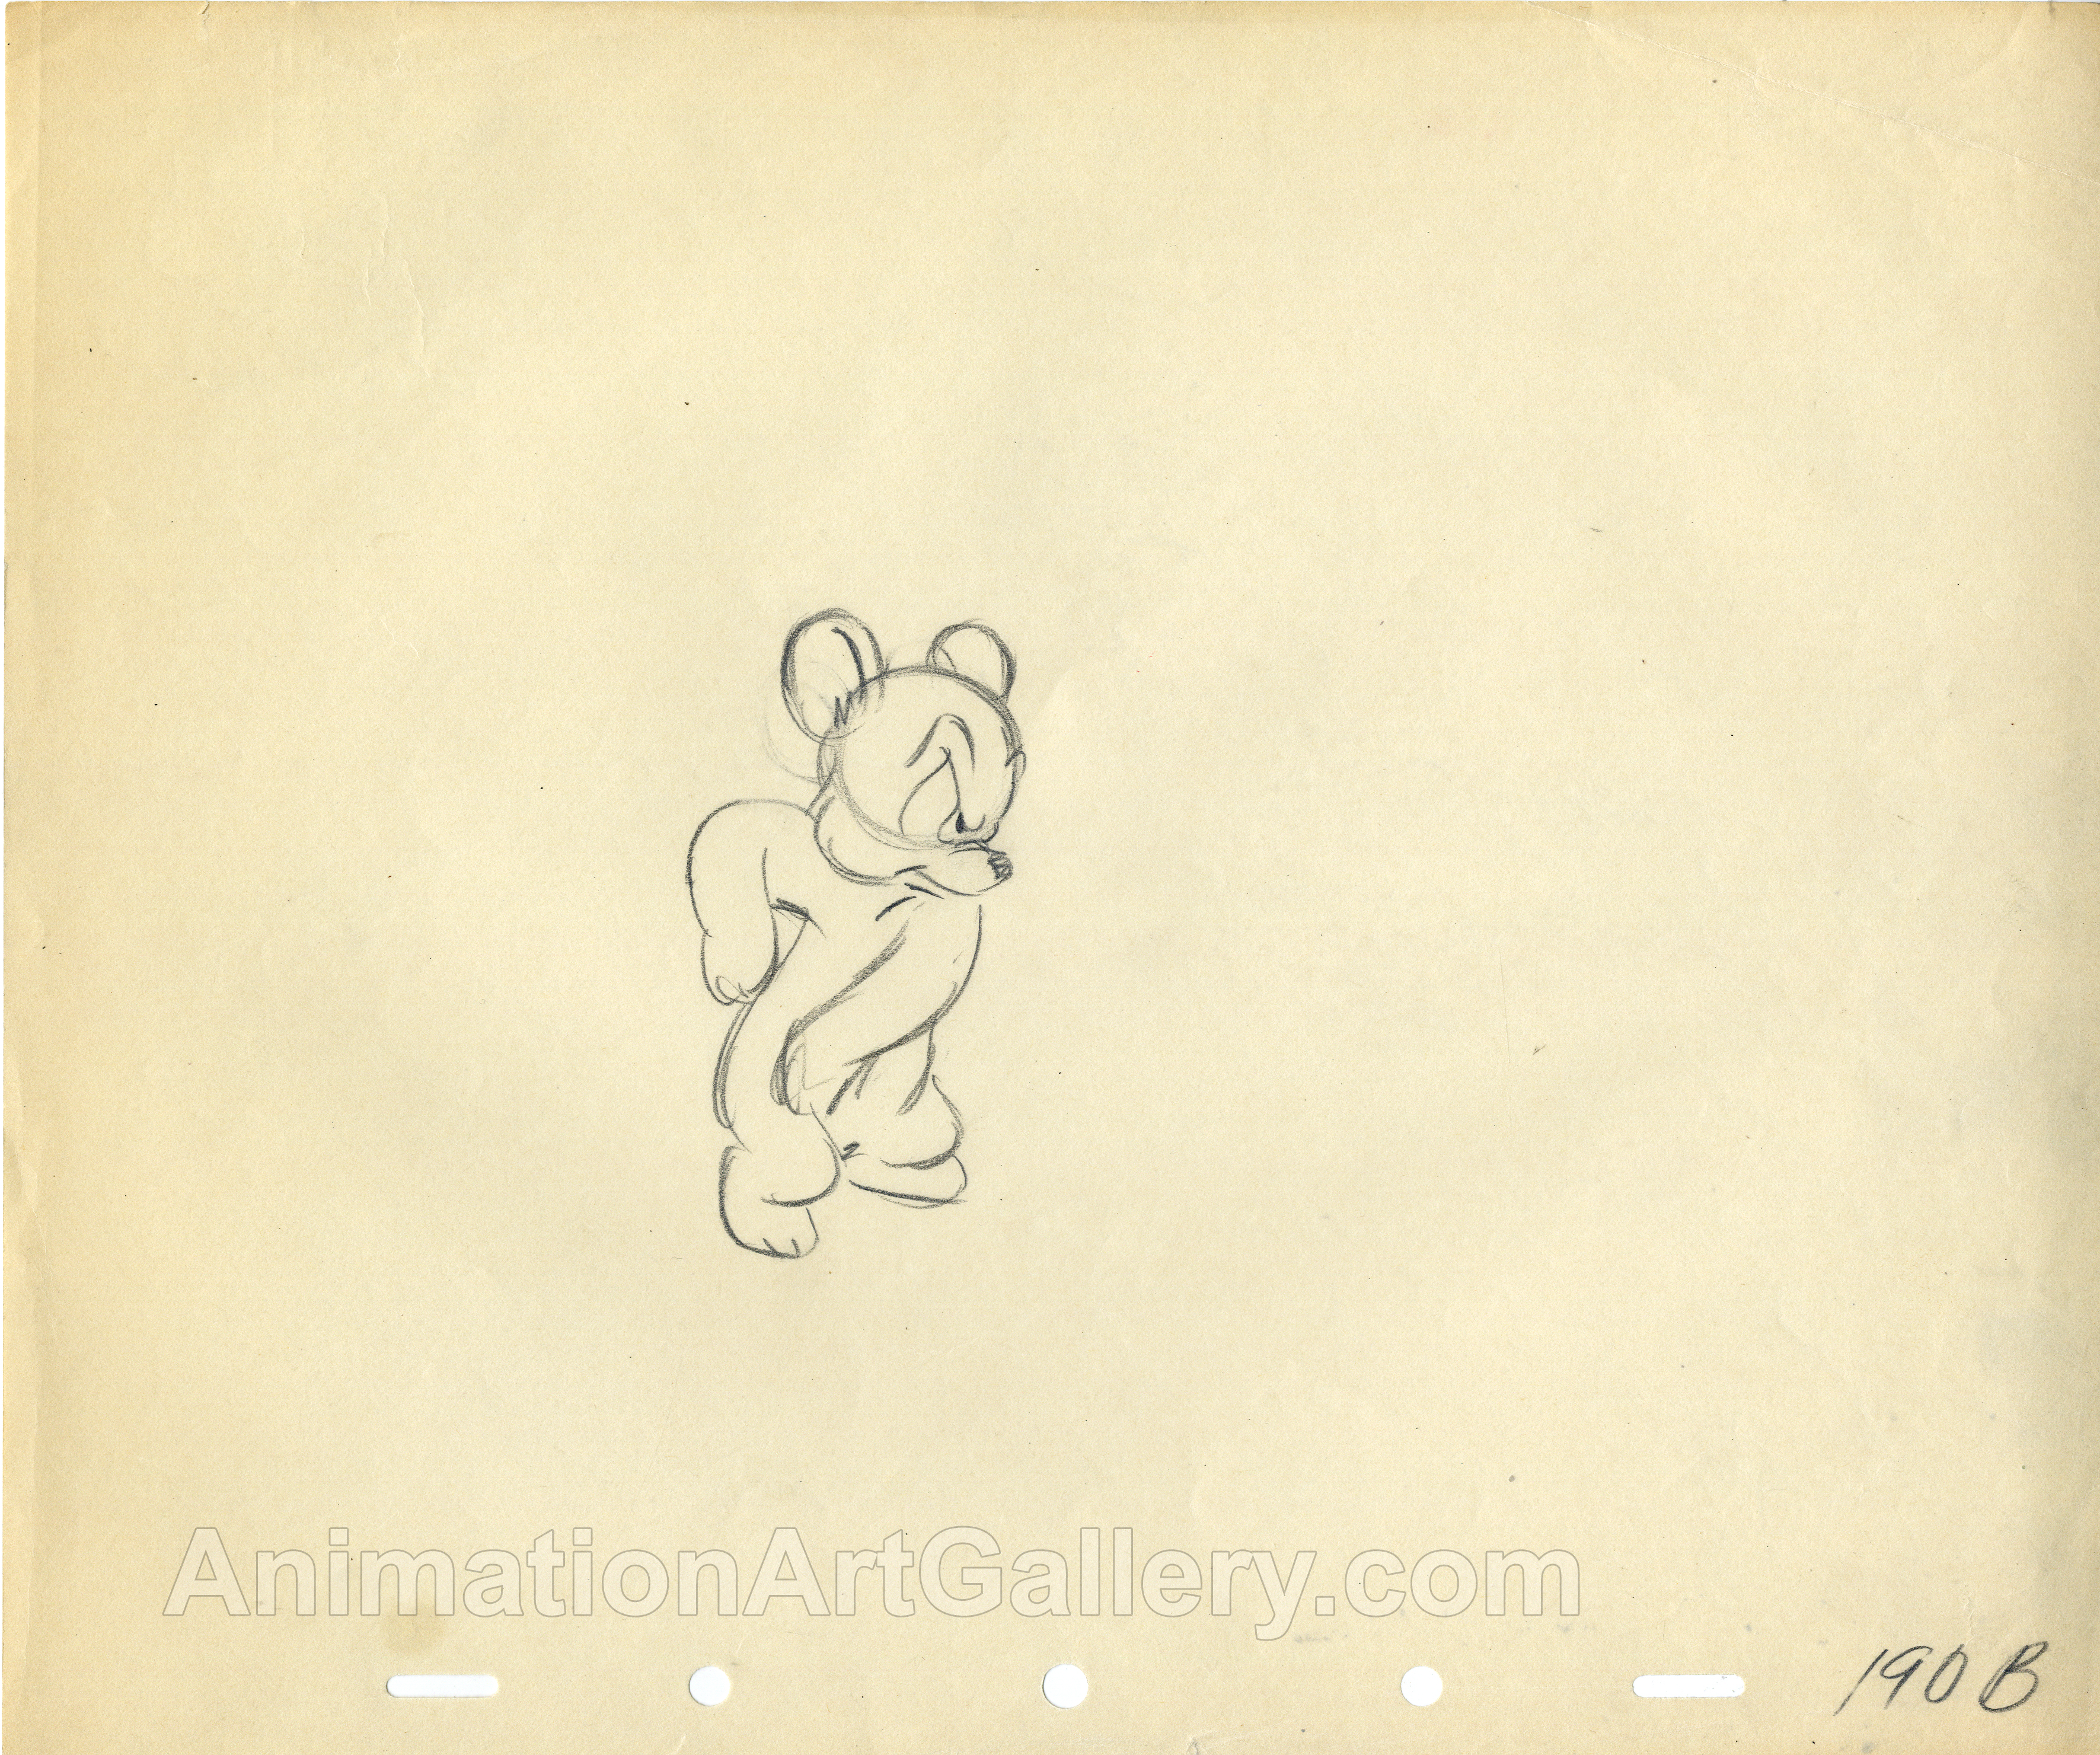 Original Production Drawing of s bear cub from Disney